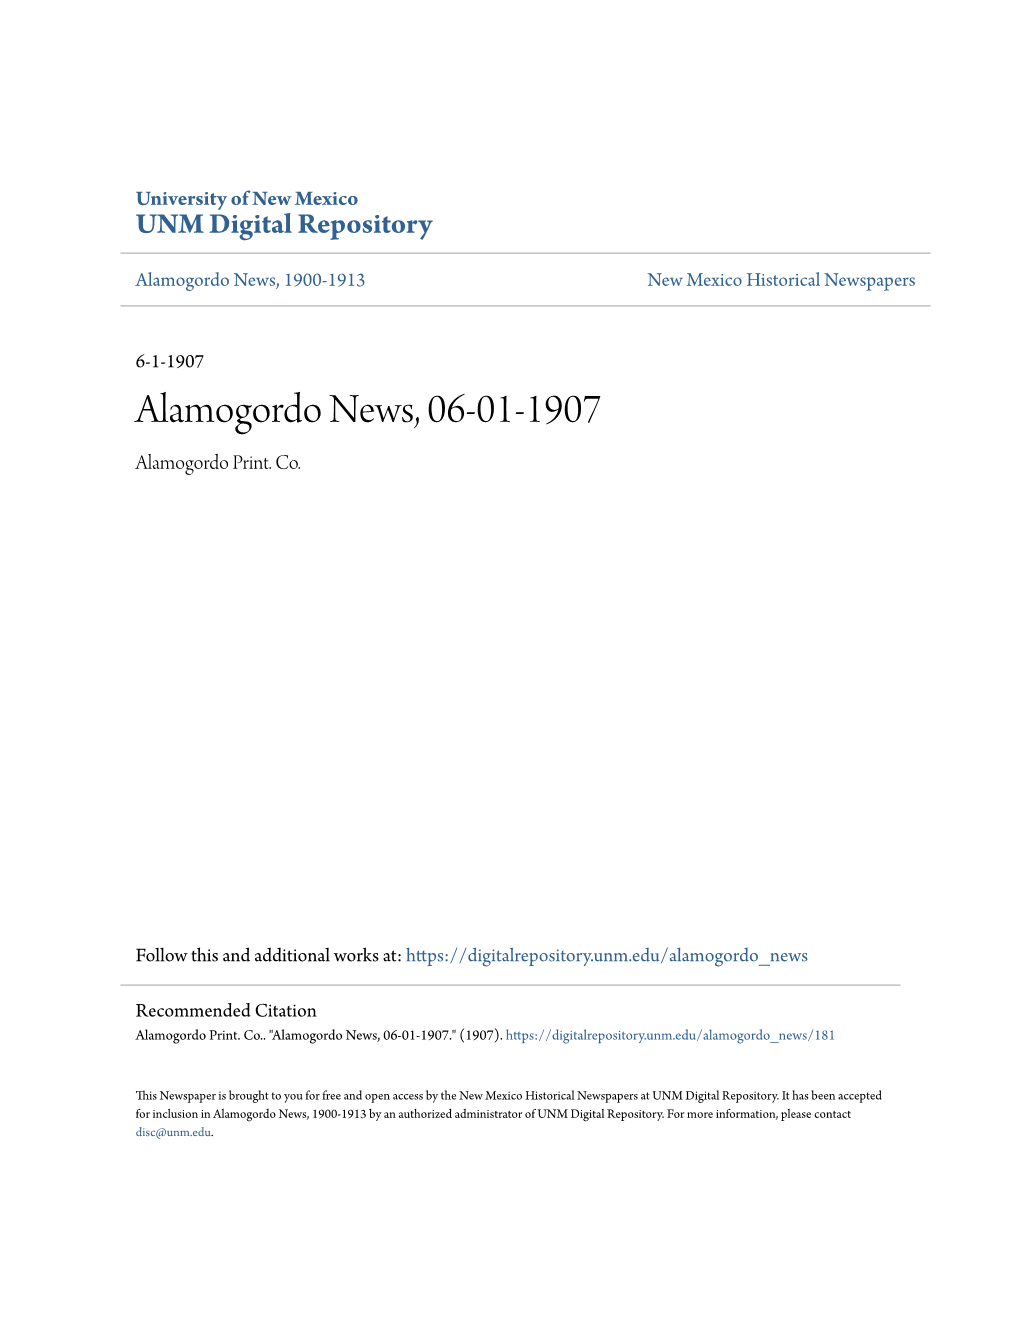 Alamogordo News, 06-01-1907 Alamogordo Print